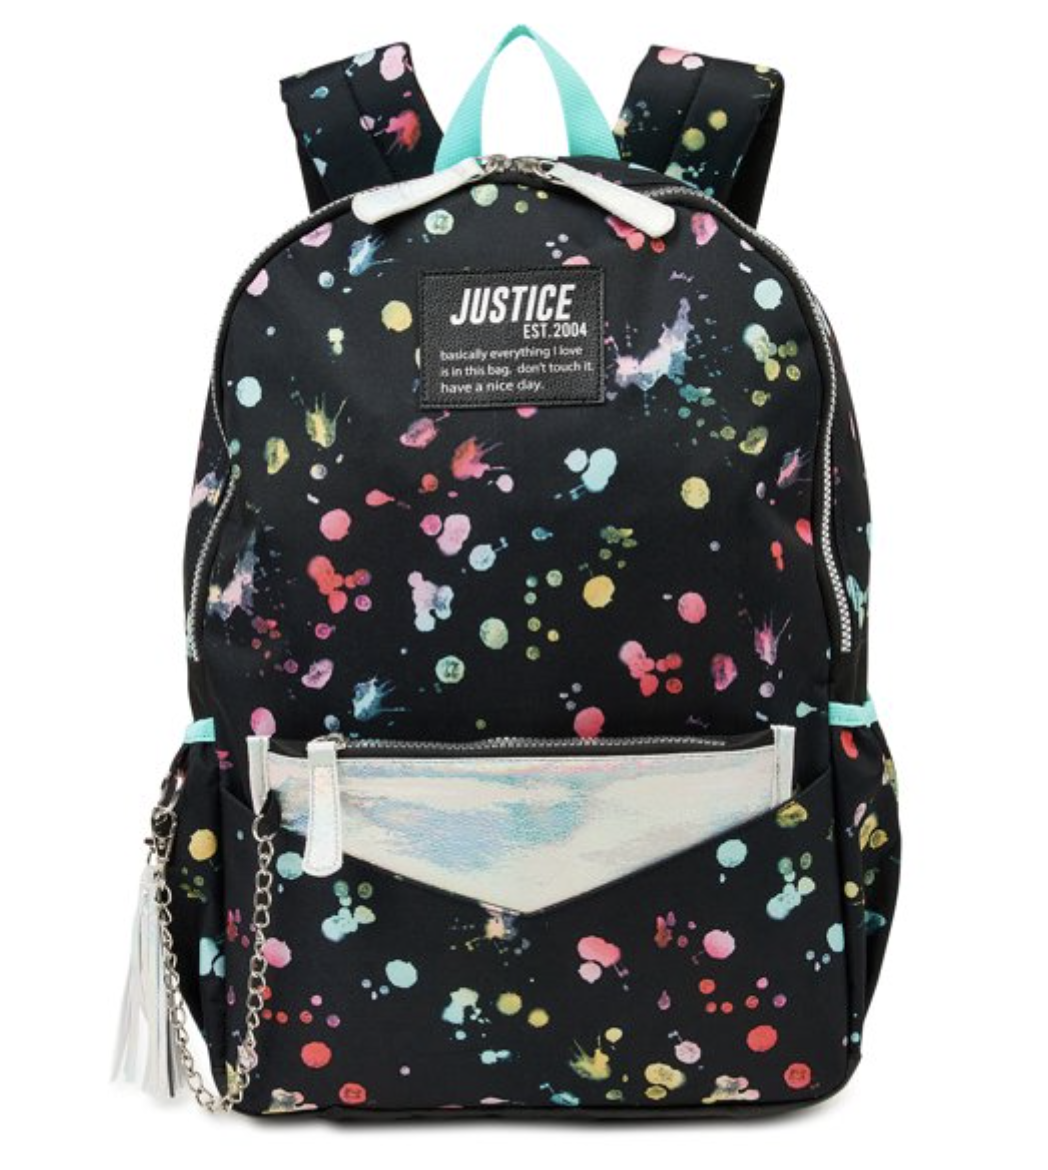 Justice Girls Backpack! HOT SALE At Walmart!